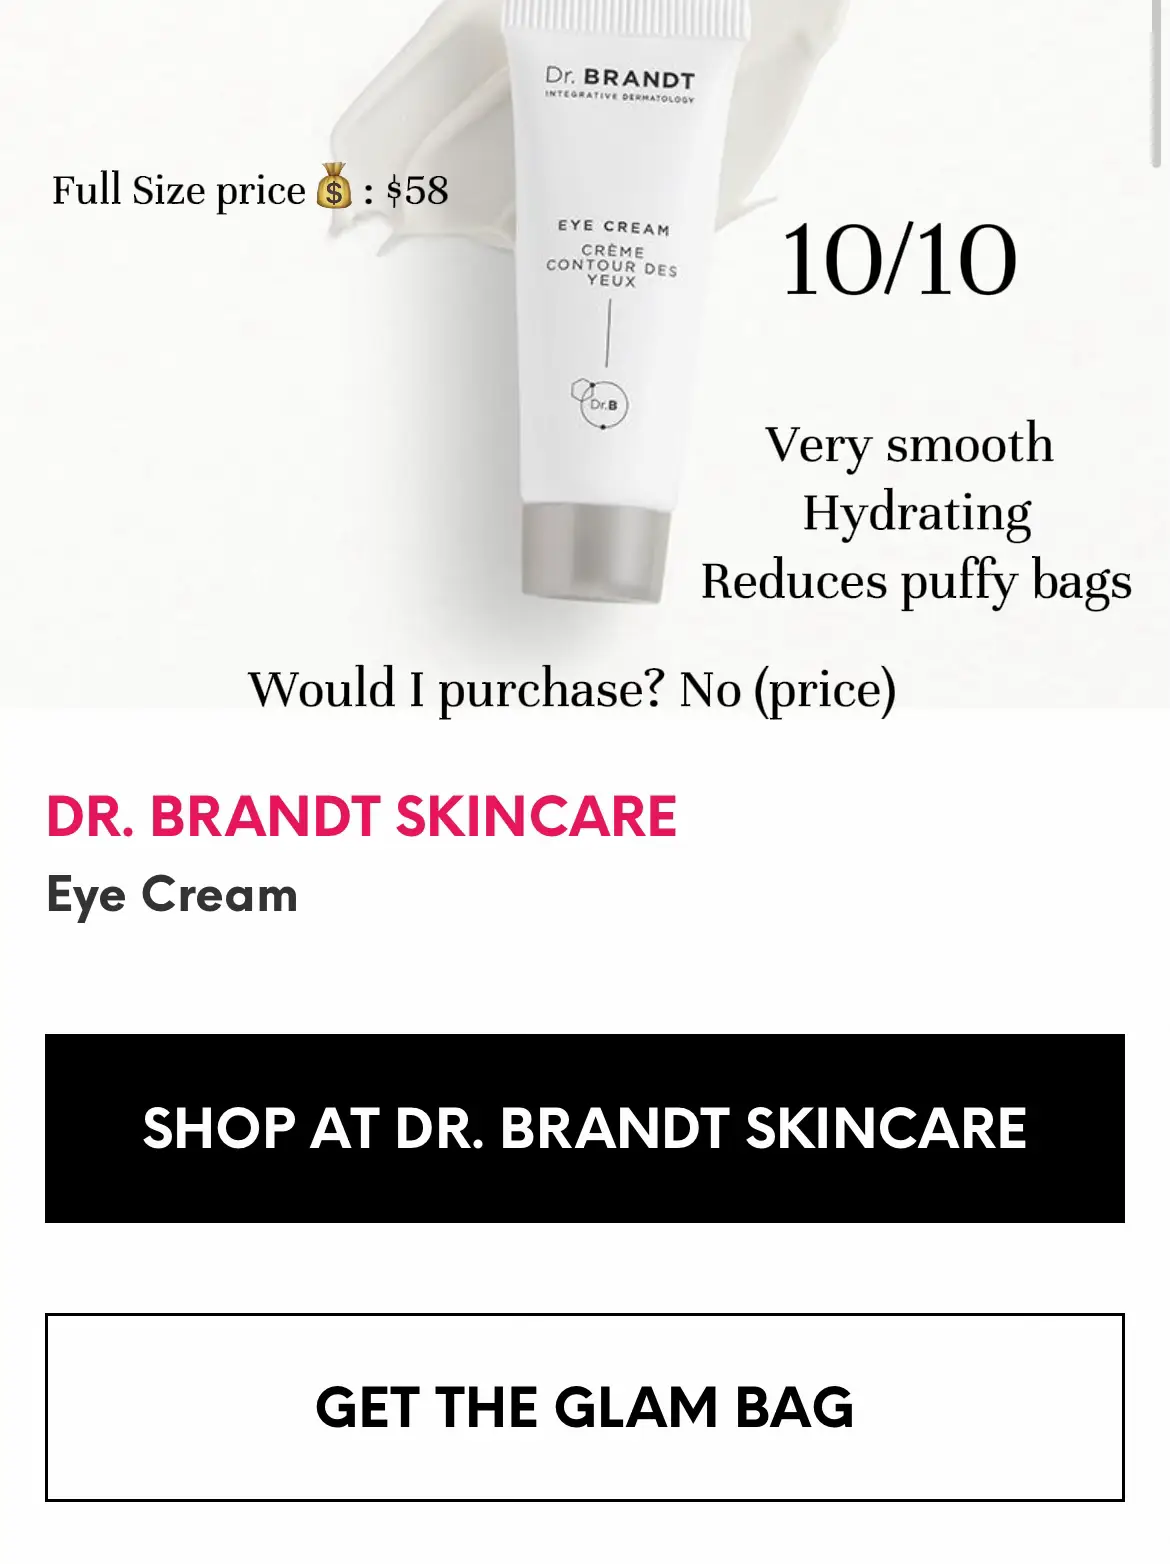 Best-Of Dr. Brandt Skincare Bundle by DR. BRANDT SKINCARE, Accessories, Misc